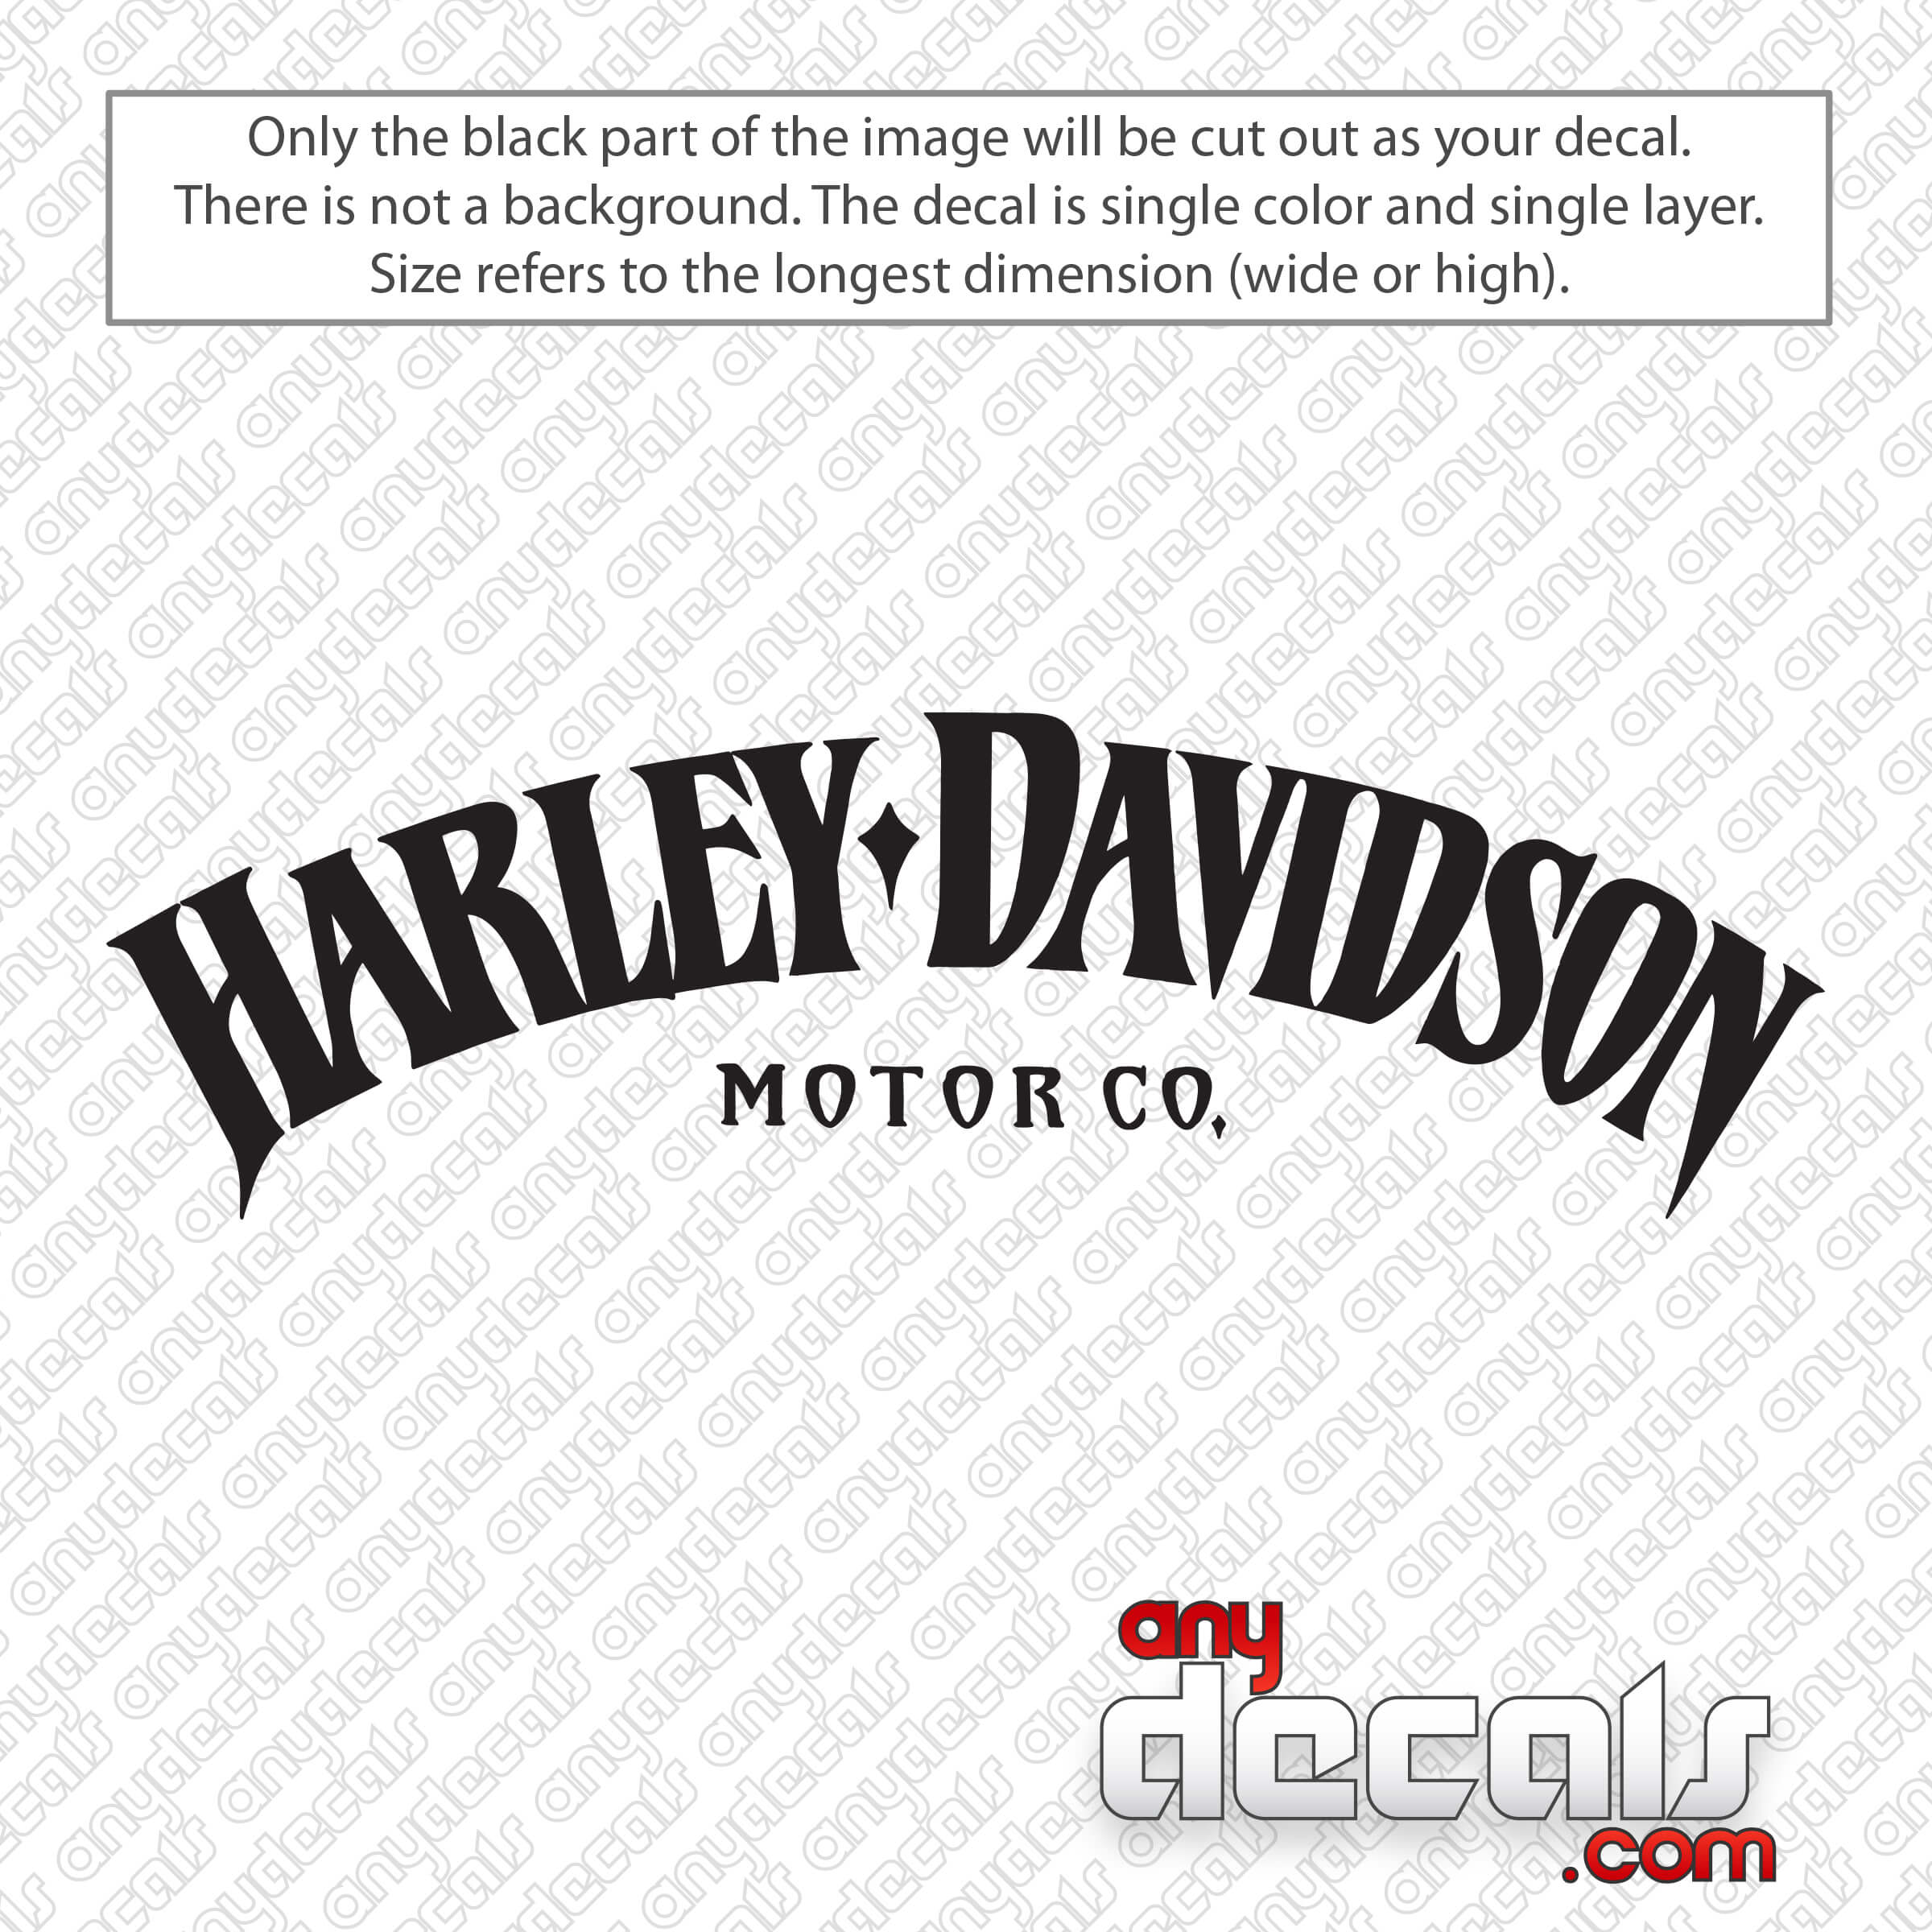 Stickers et autocollant Harley davidson